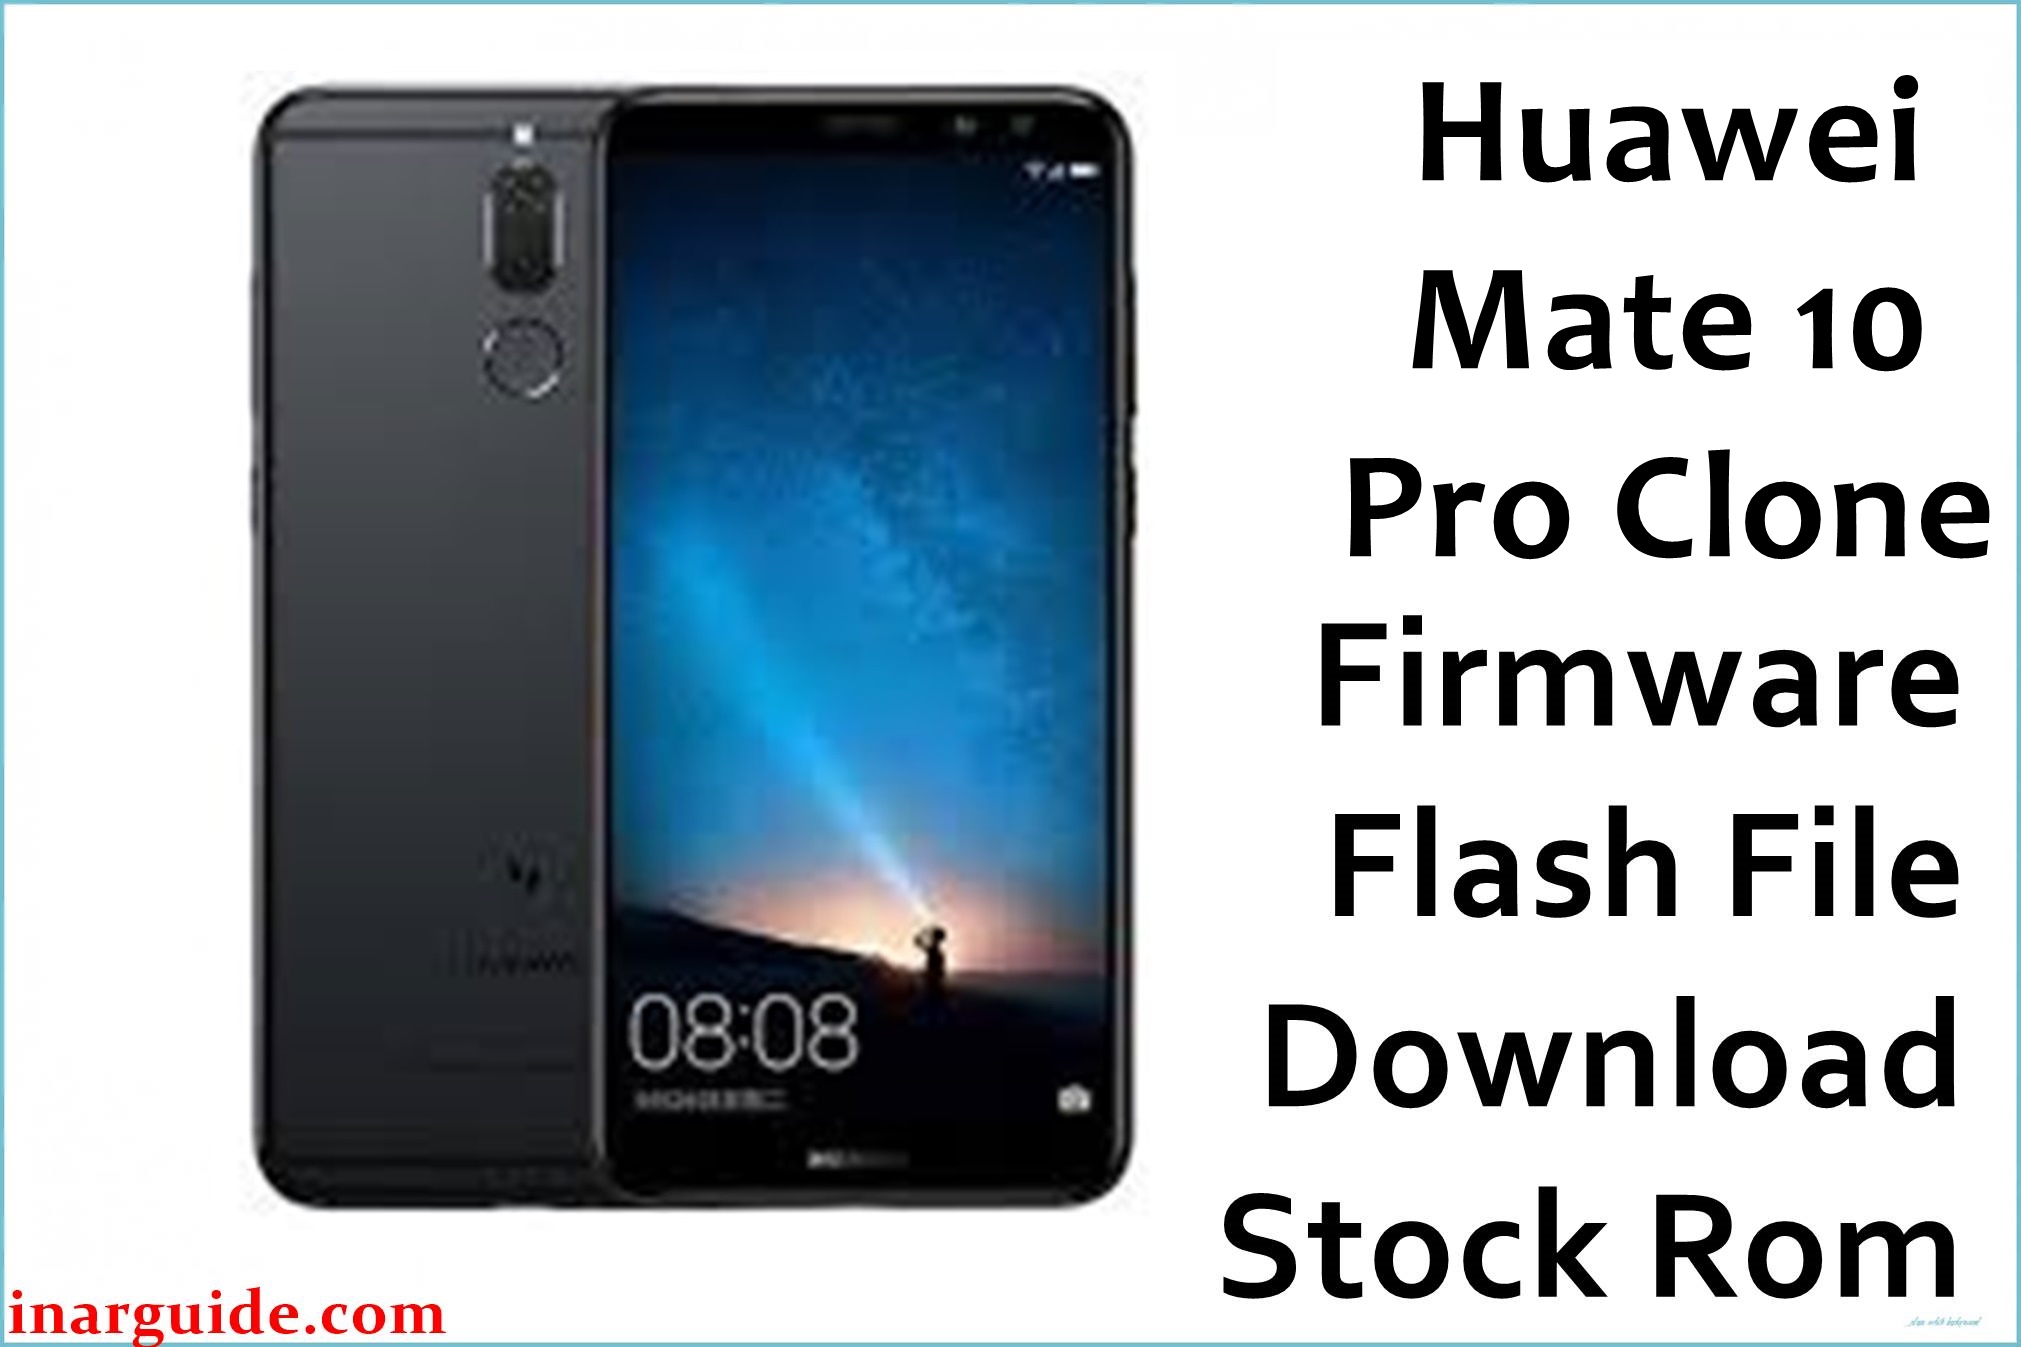 Huawei Mate 10 Pro Clone